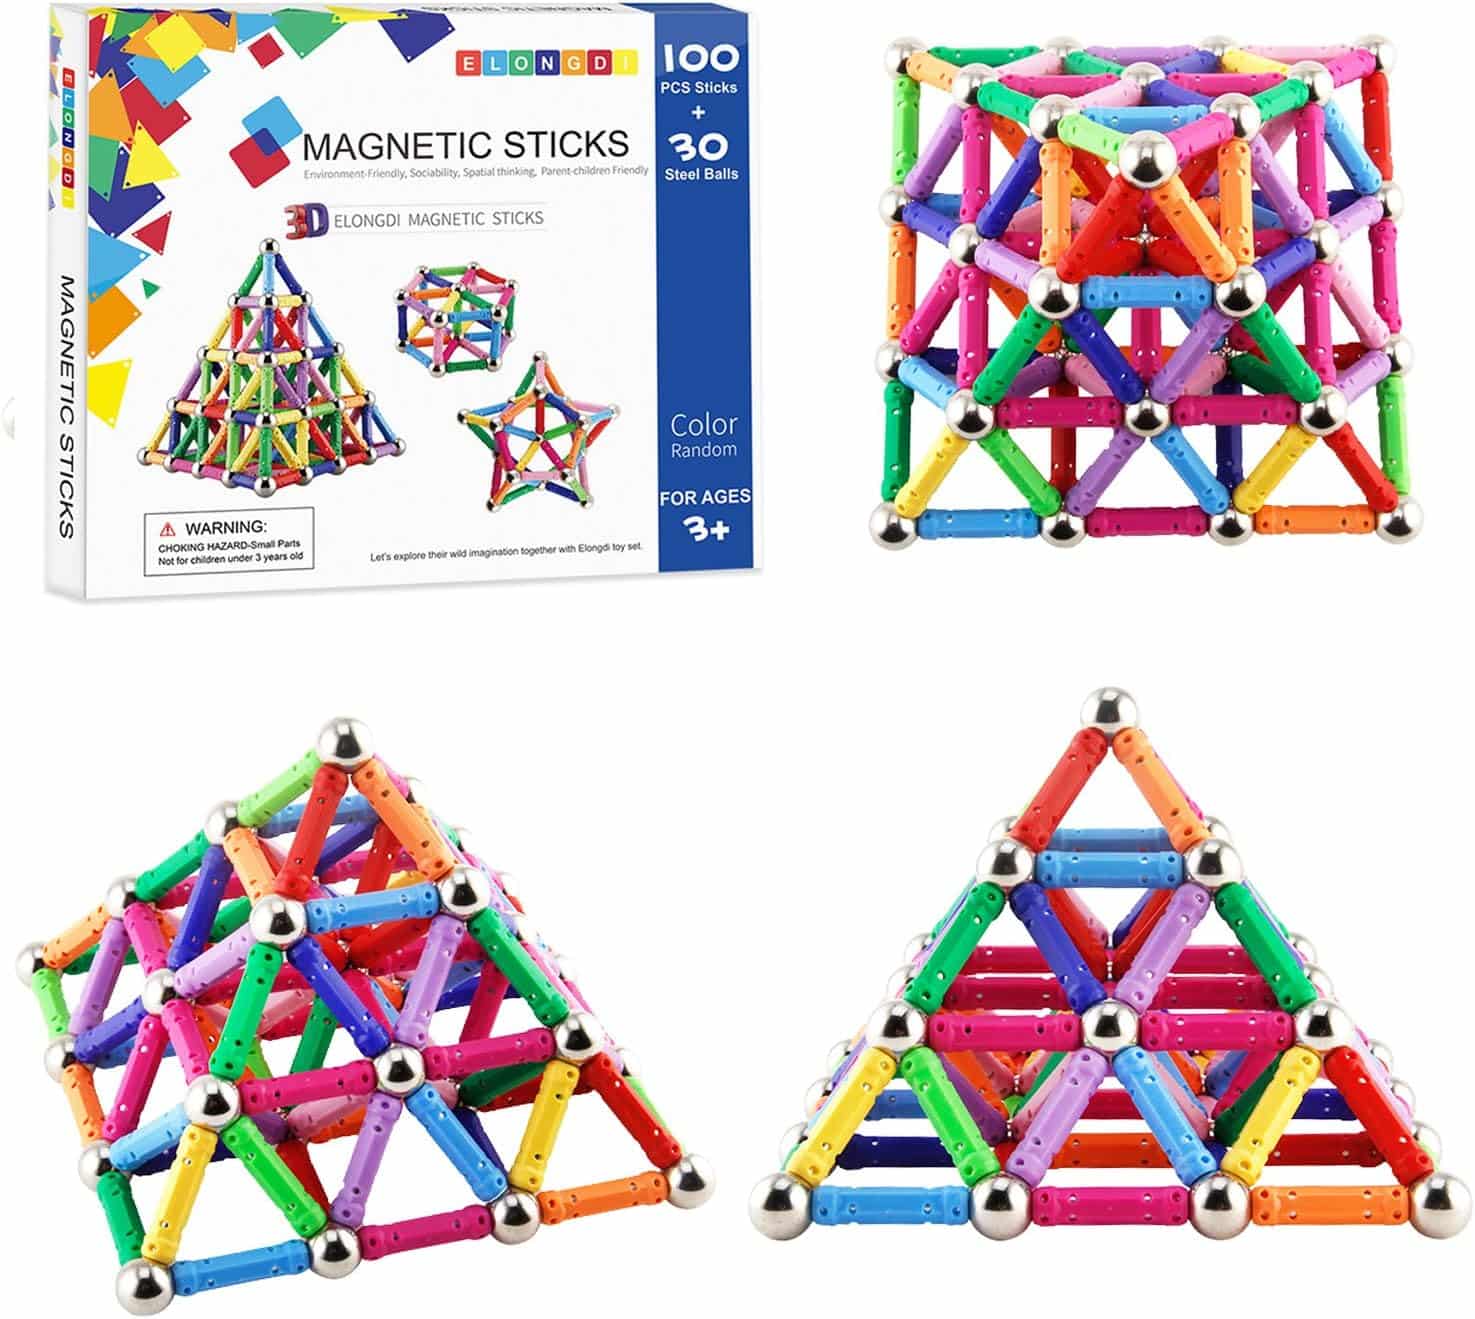 ELONGDI Magnetic Building Sticks Review: Unlock Your Child's Creativity